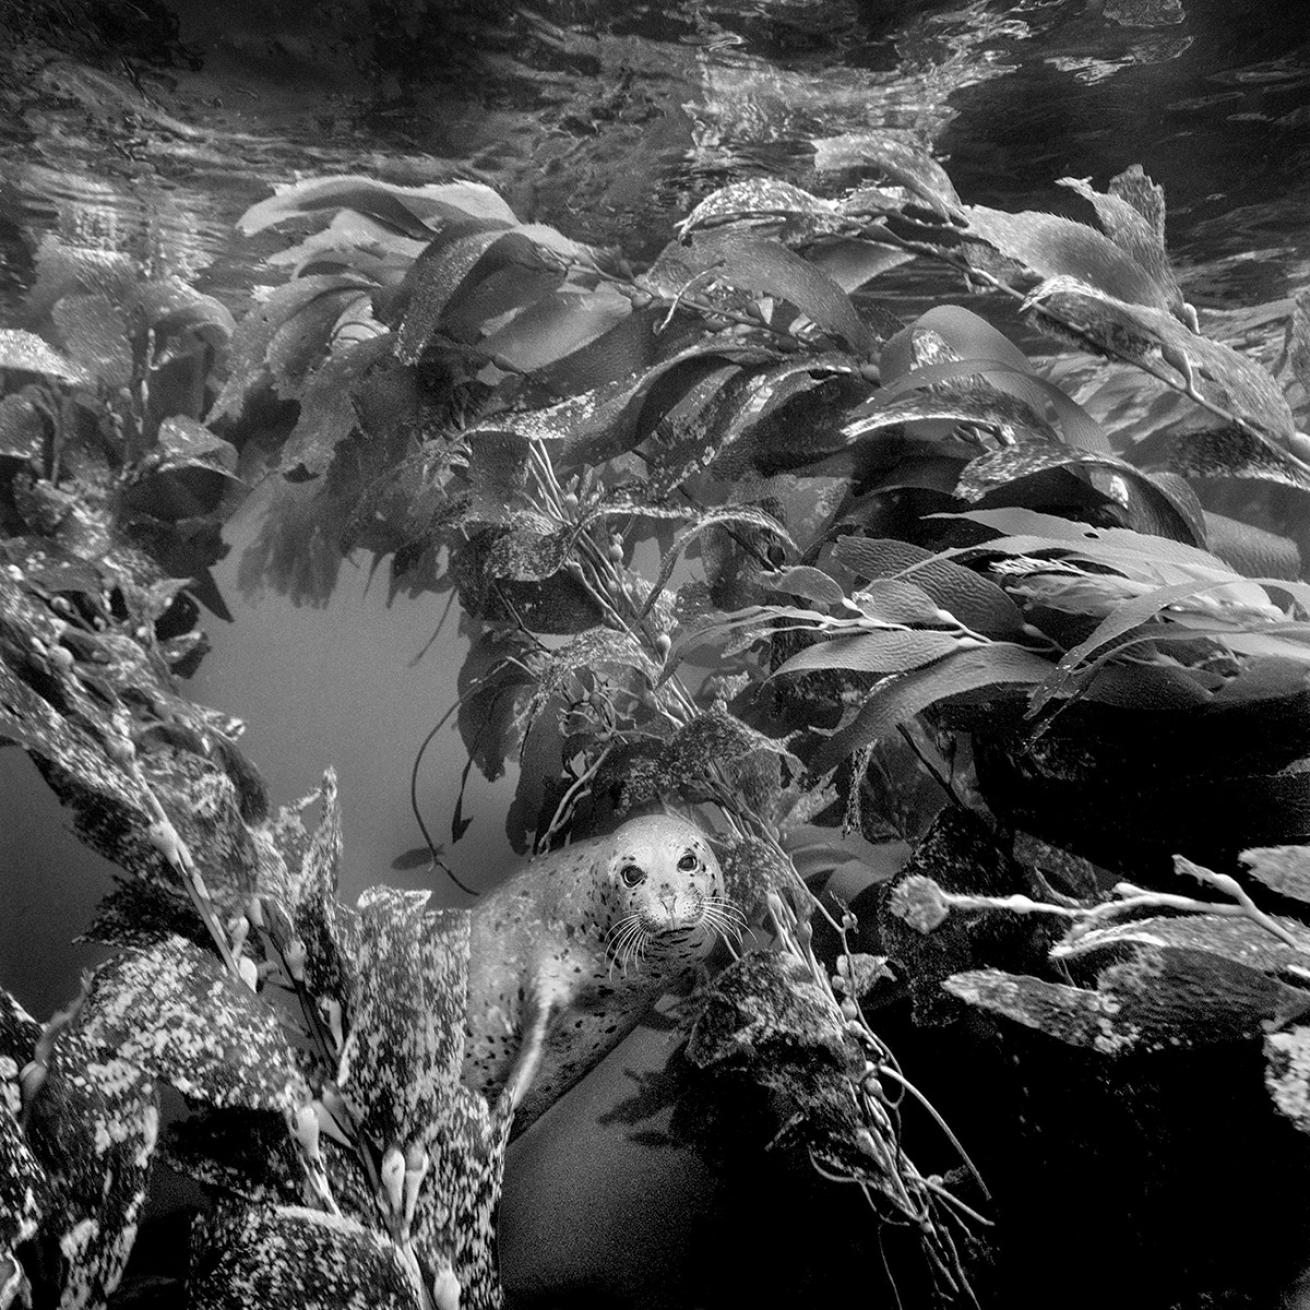 Milestones in Underwater Photography